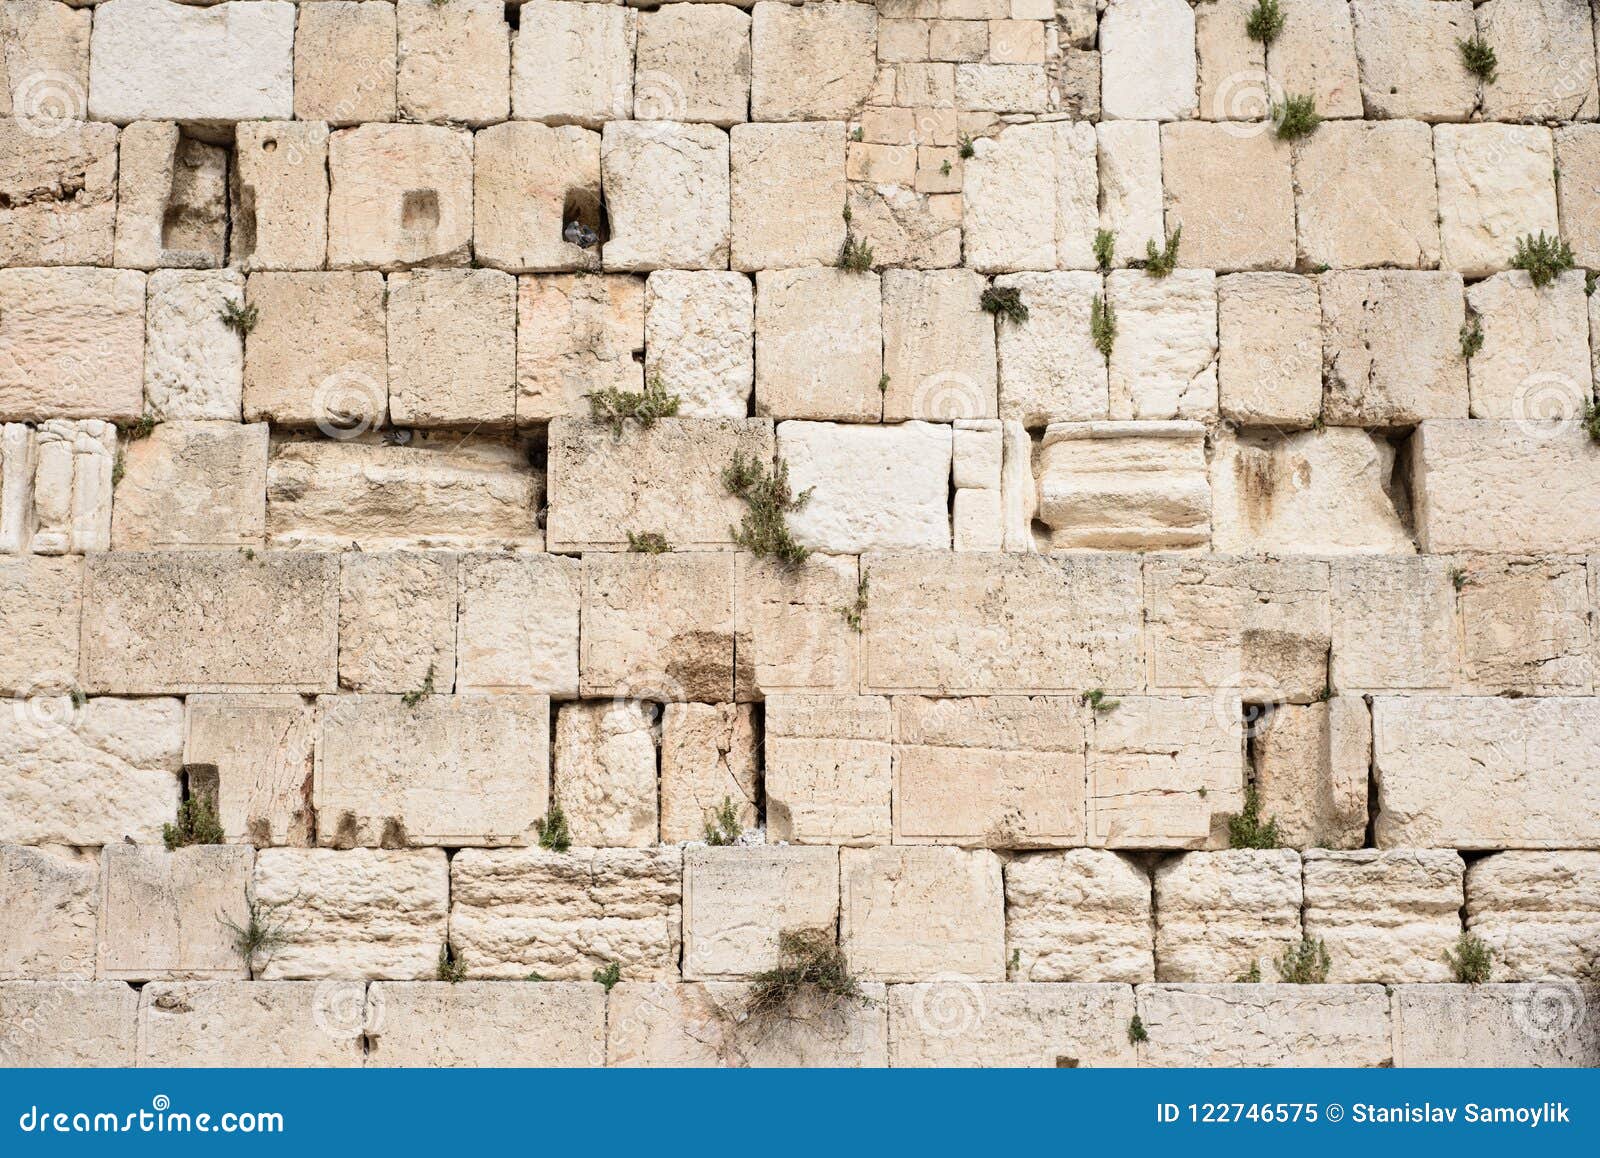 wailing wall kotel, western wall useful for background. jerusalem, israel.